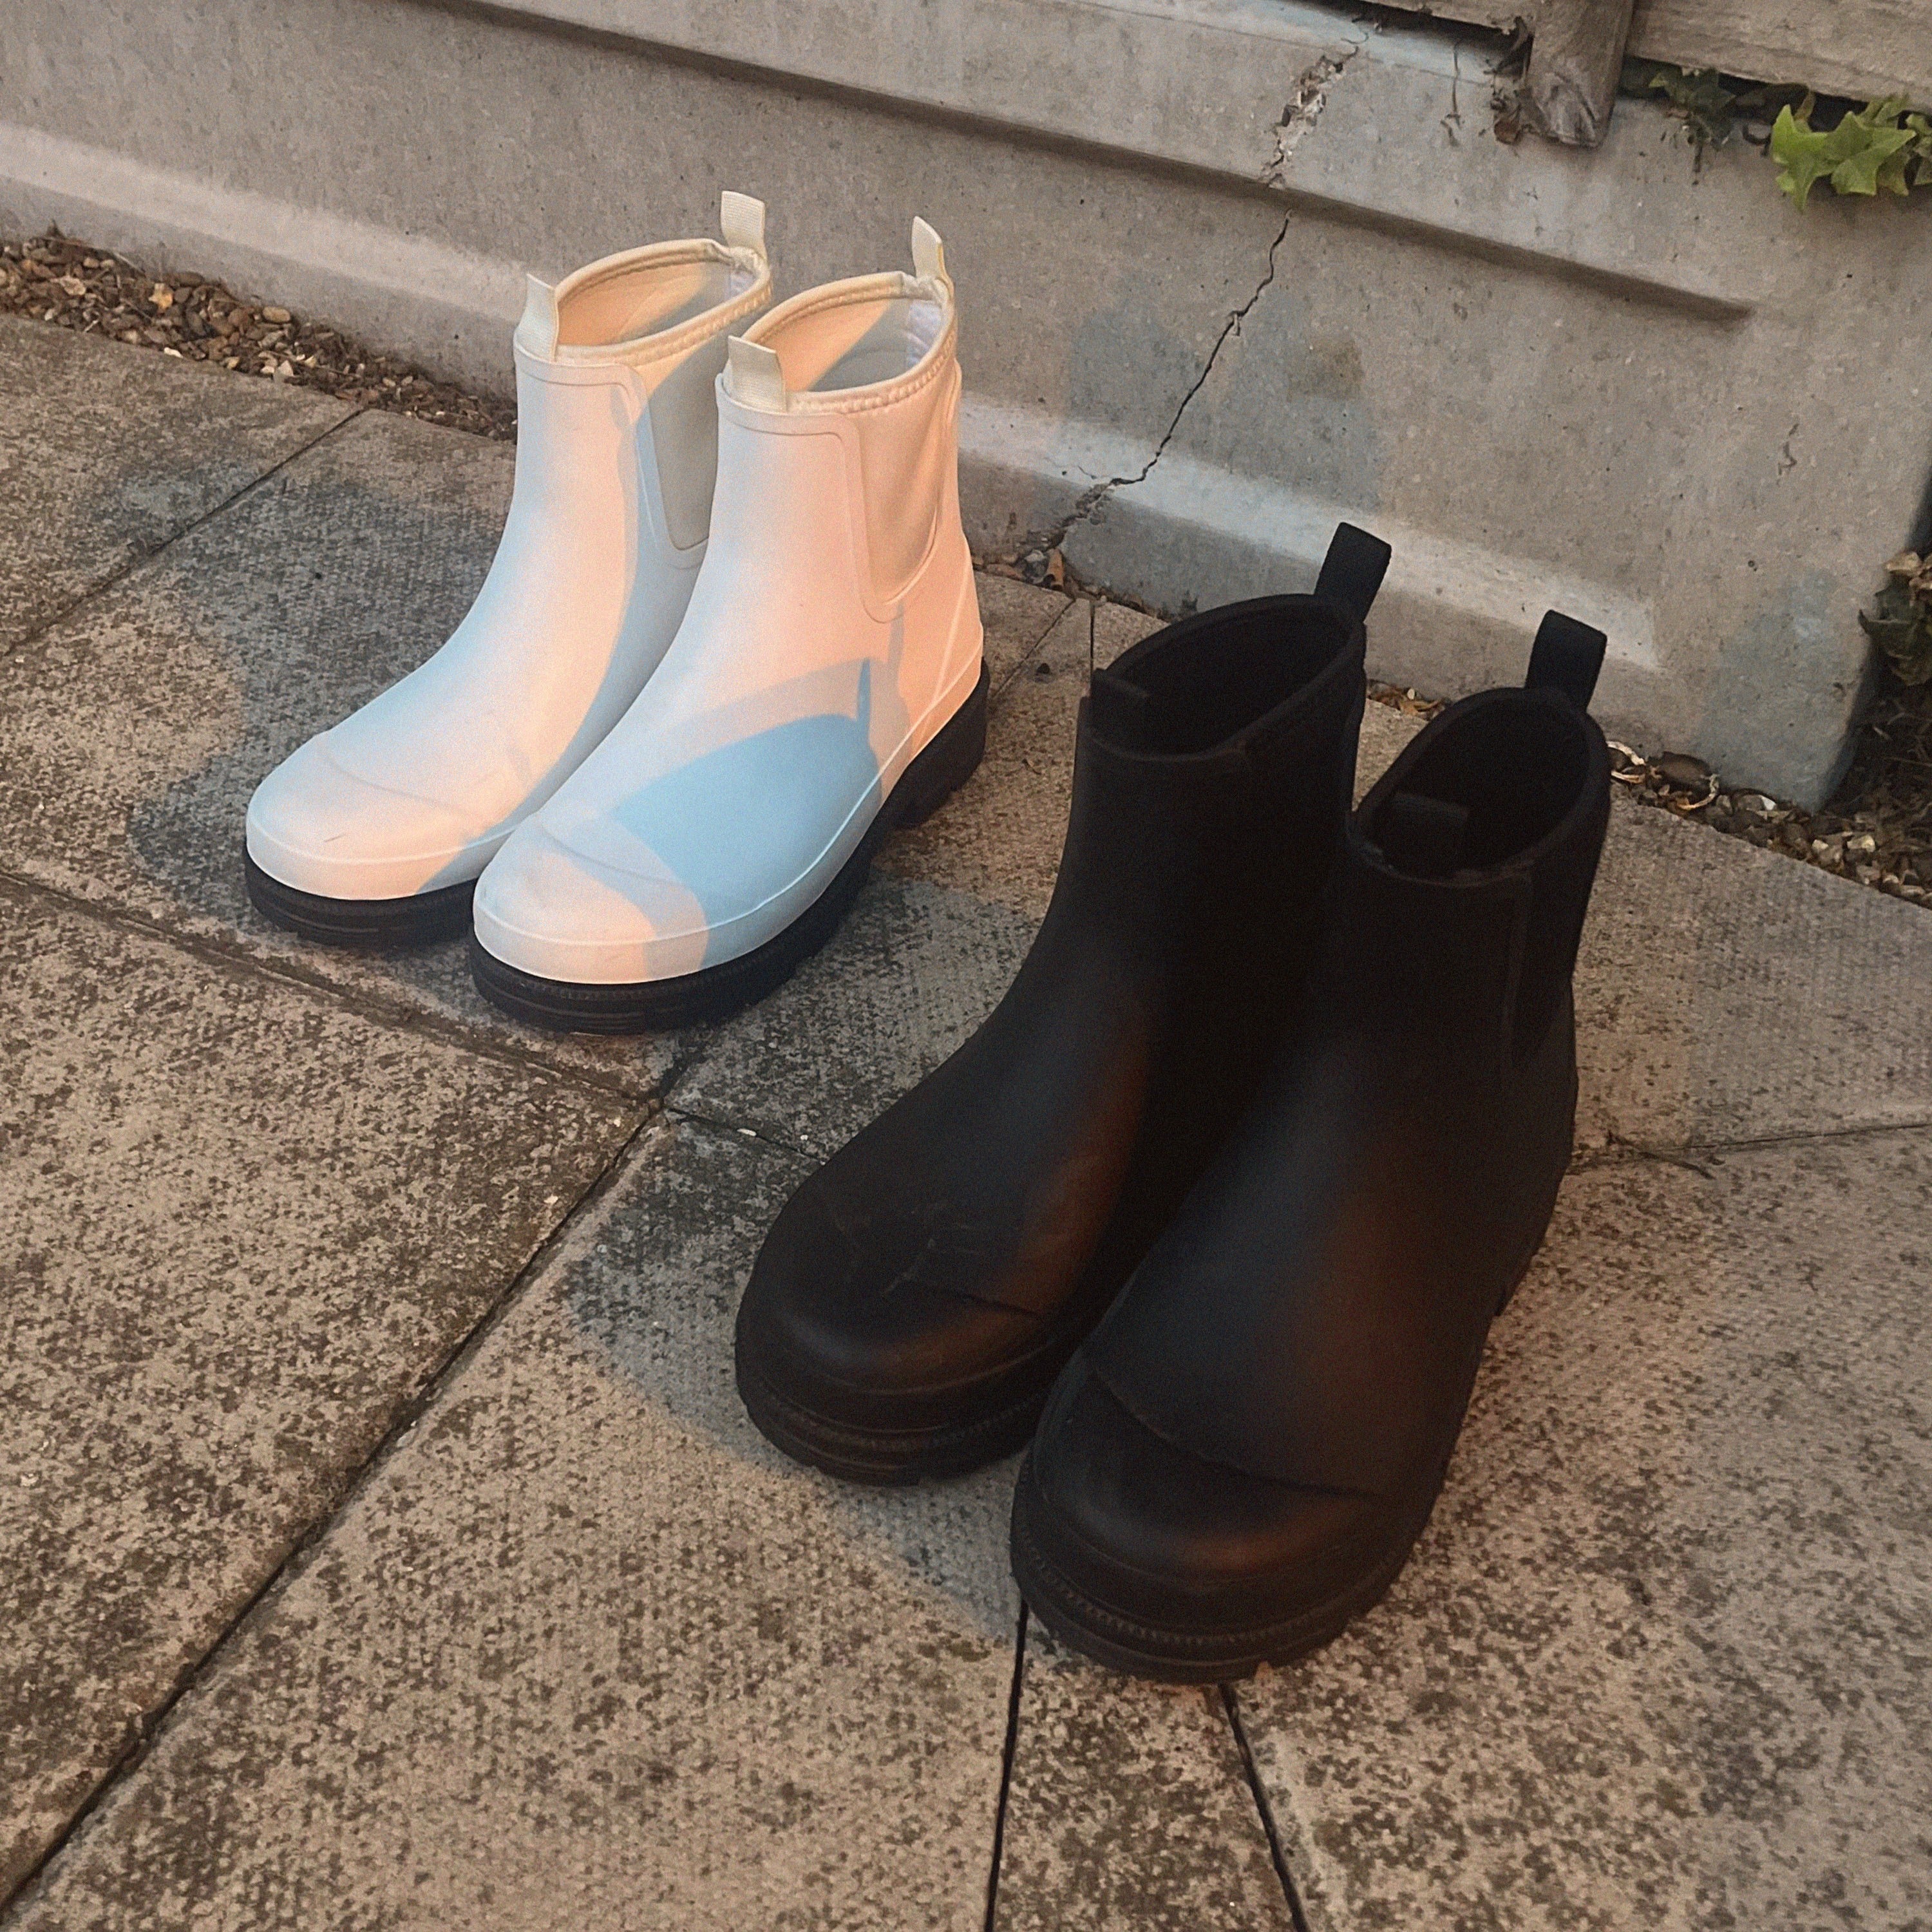 BOOTS | Waterproof walking boots.